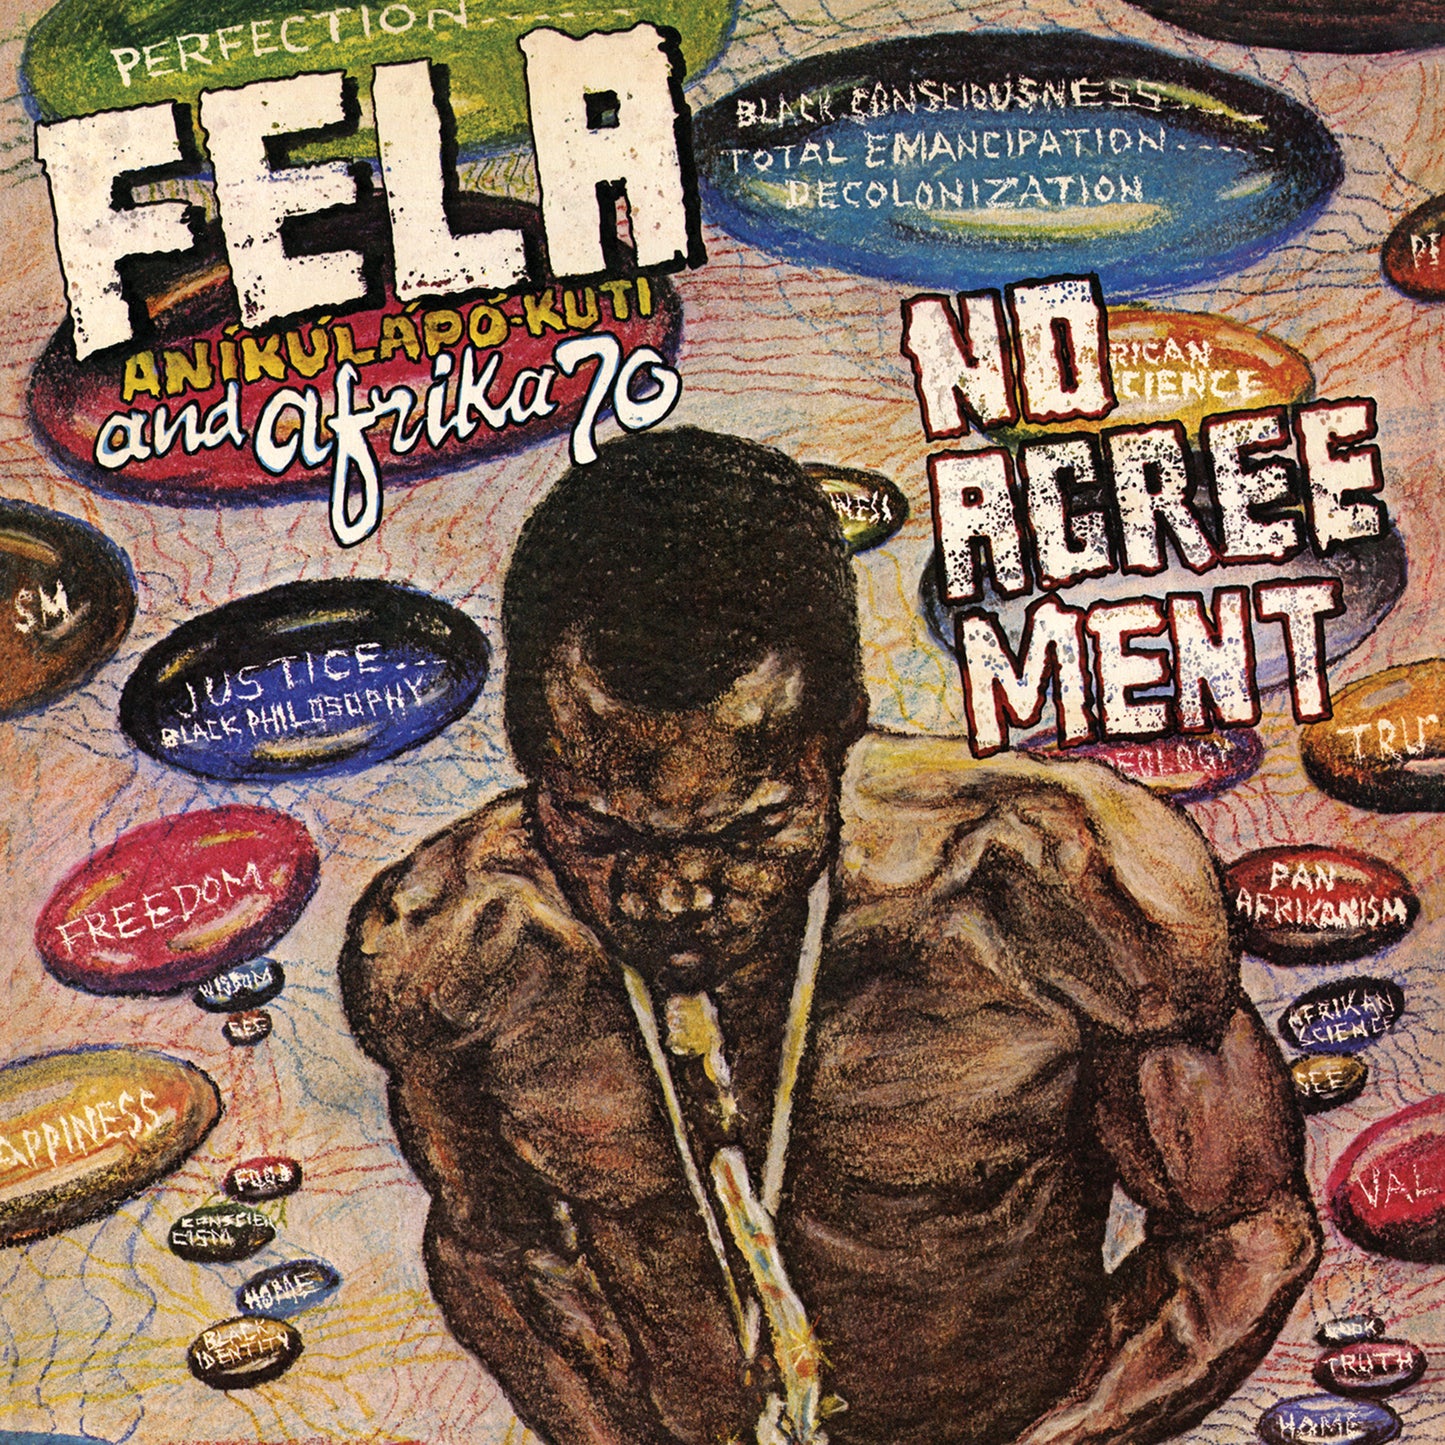 Fela Kuti - No Agreement - LP